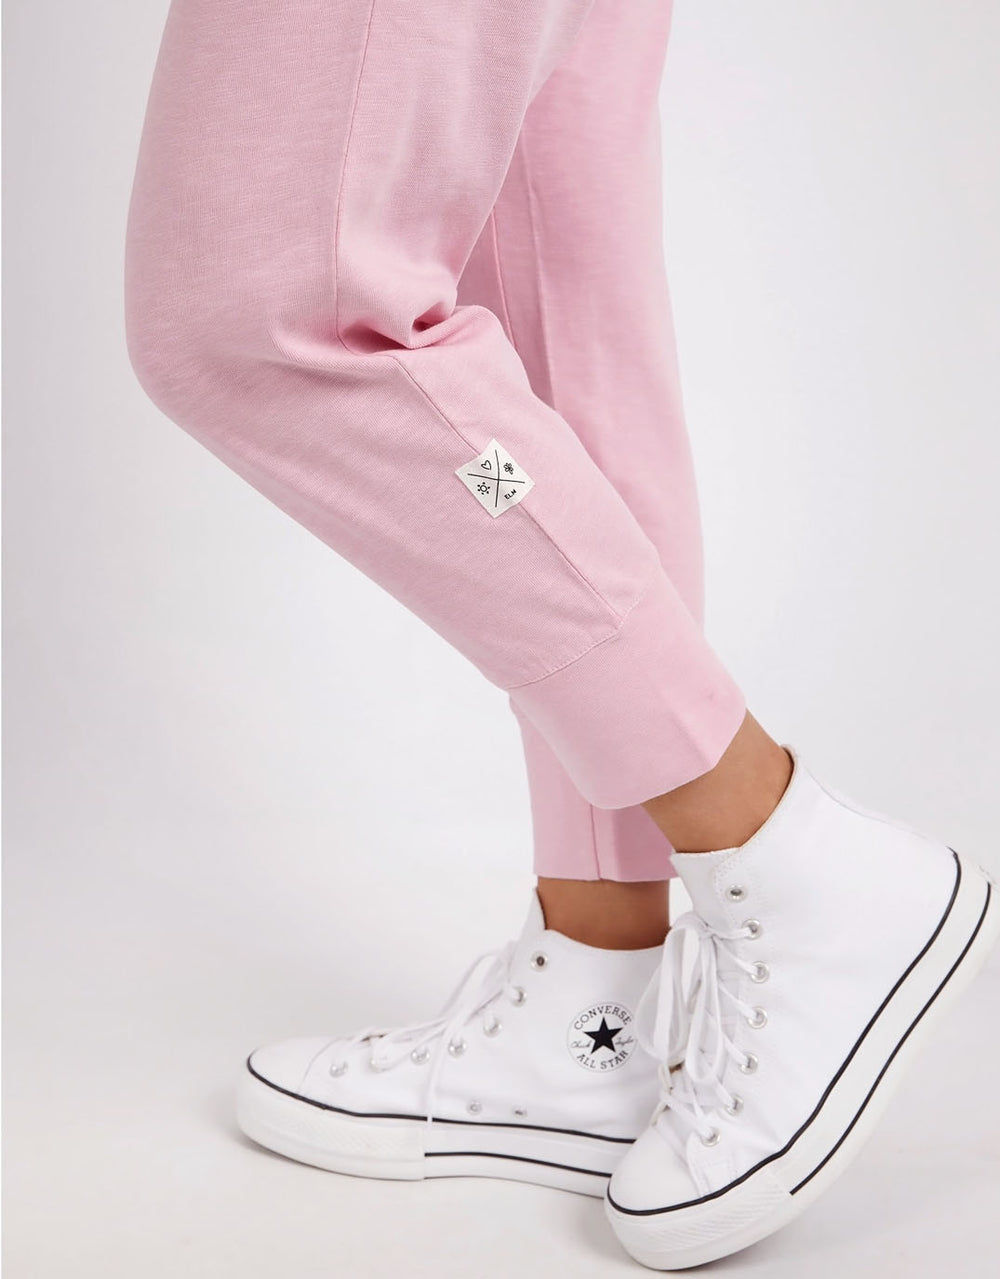 elm-3-4-brunch-pant-splendid-pink-womens-clothing